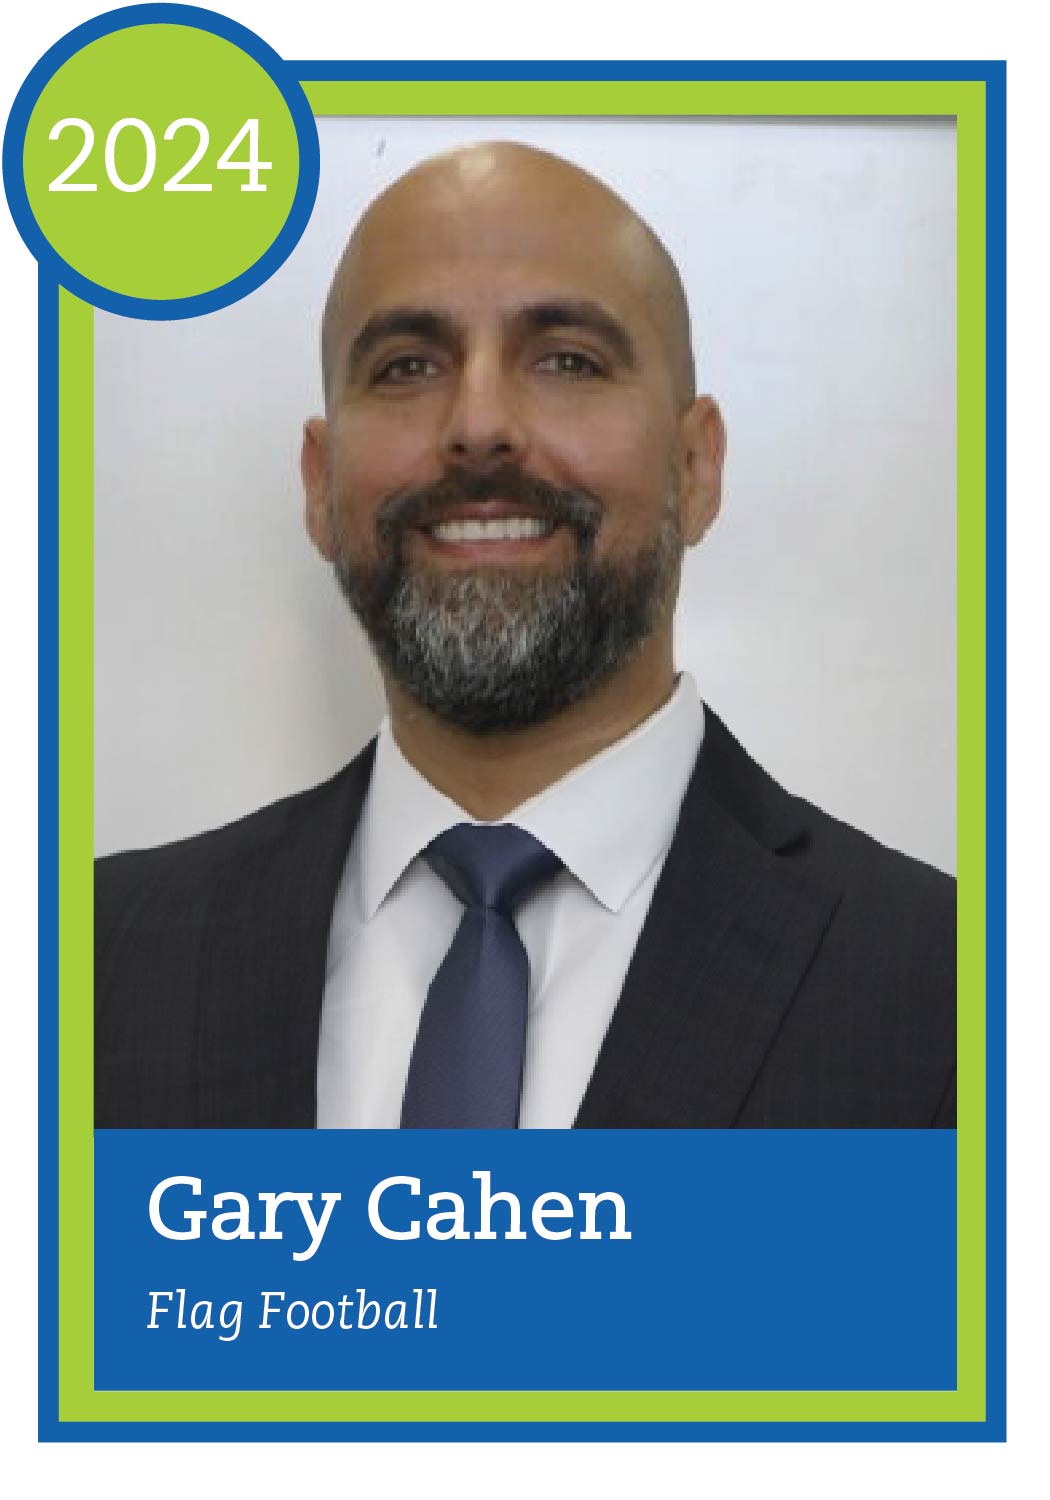 Baseball card design with headshot of Gary Cahen and text "Gary Cahen, flag football"